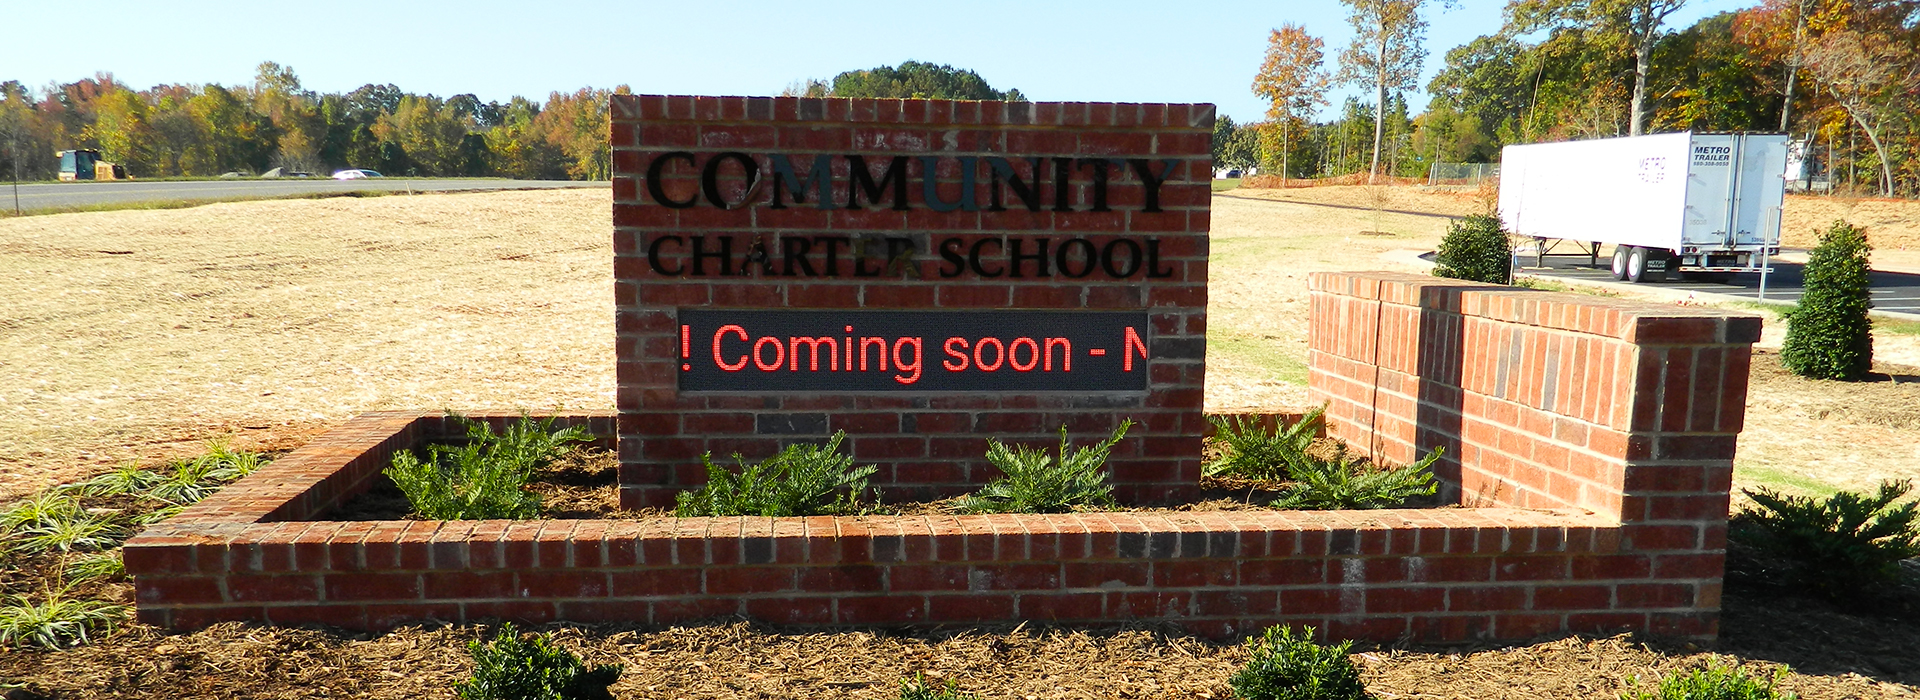 Community Charter School